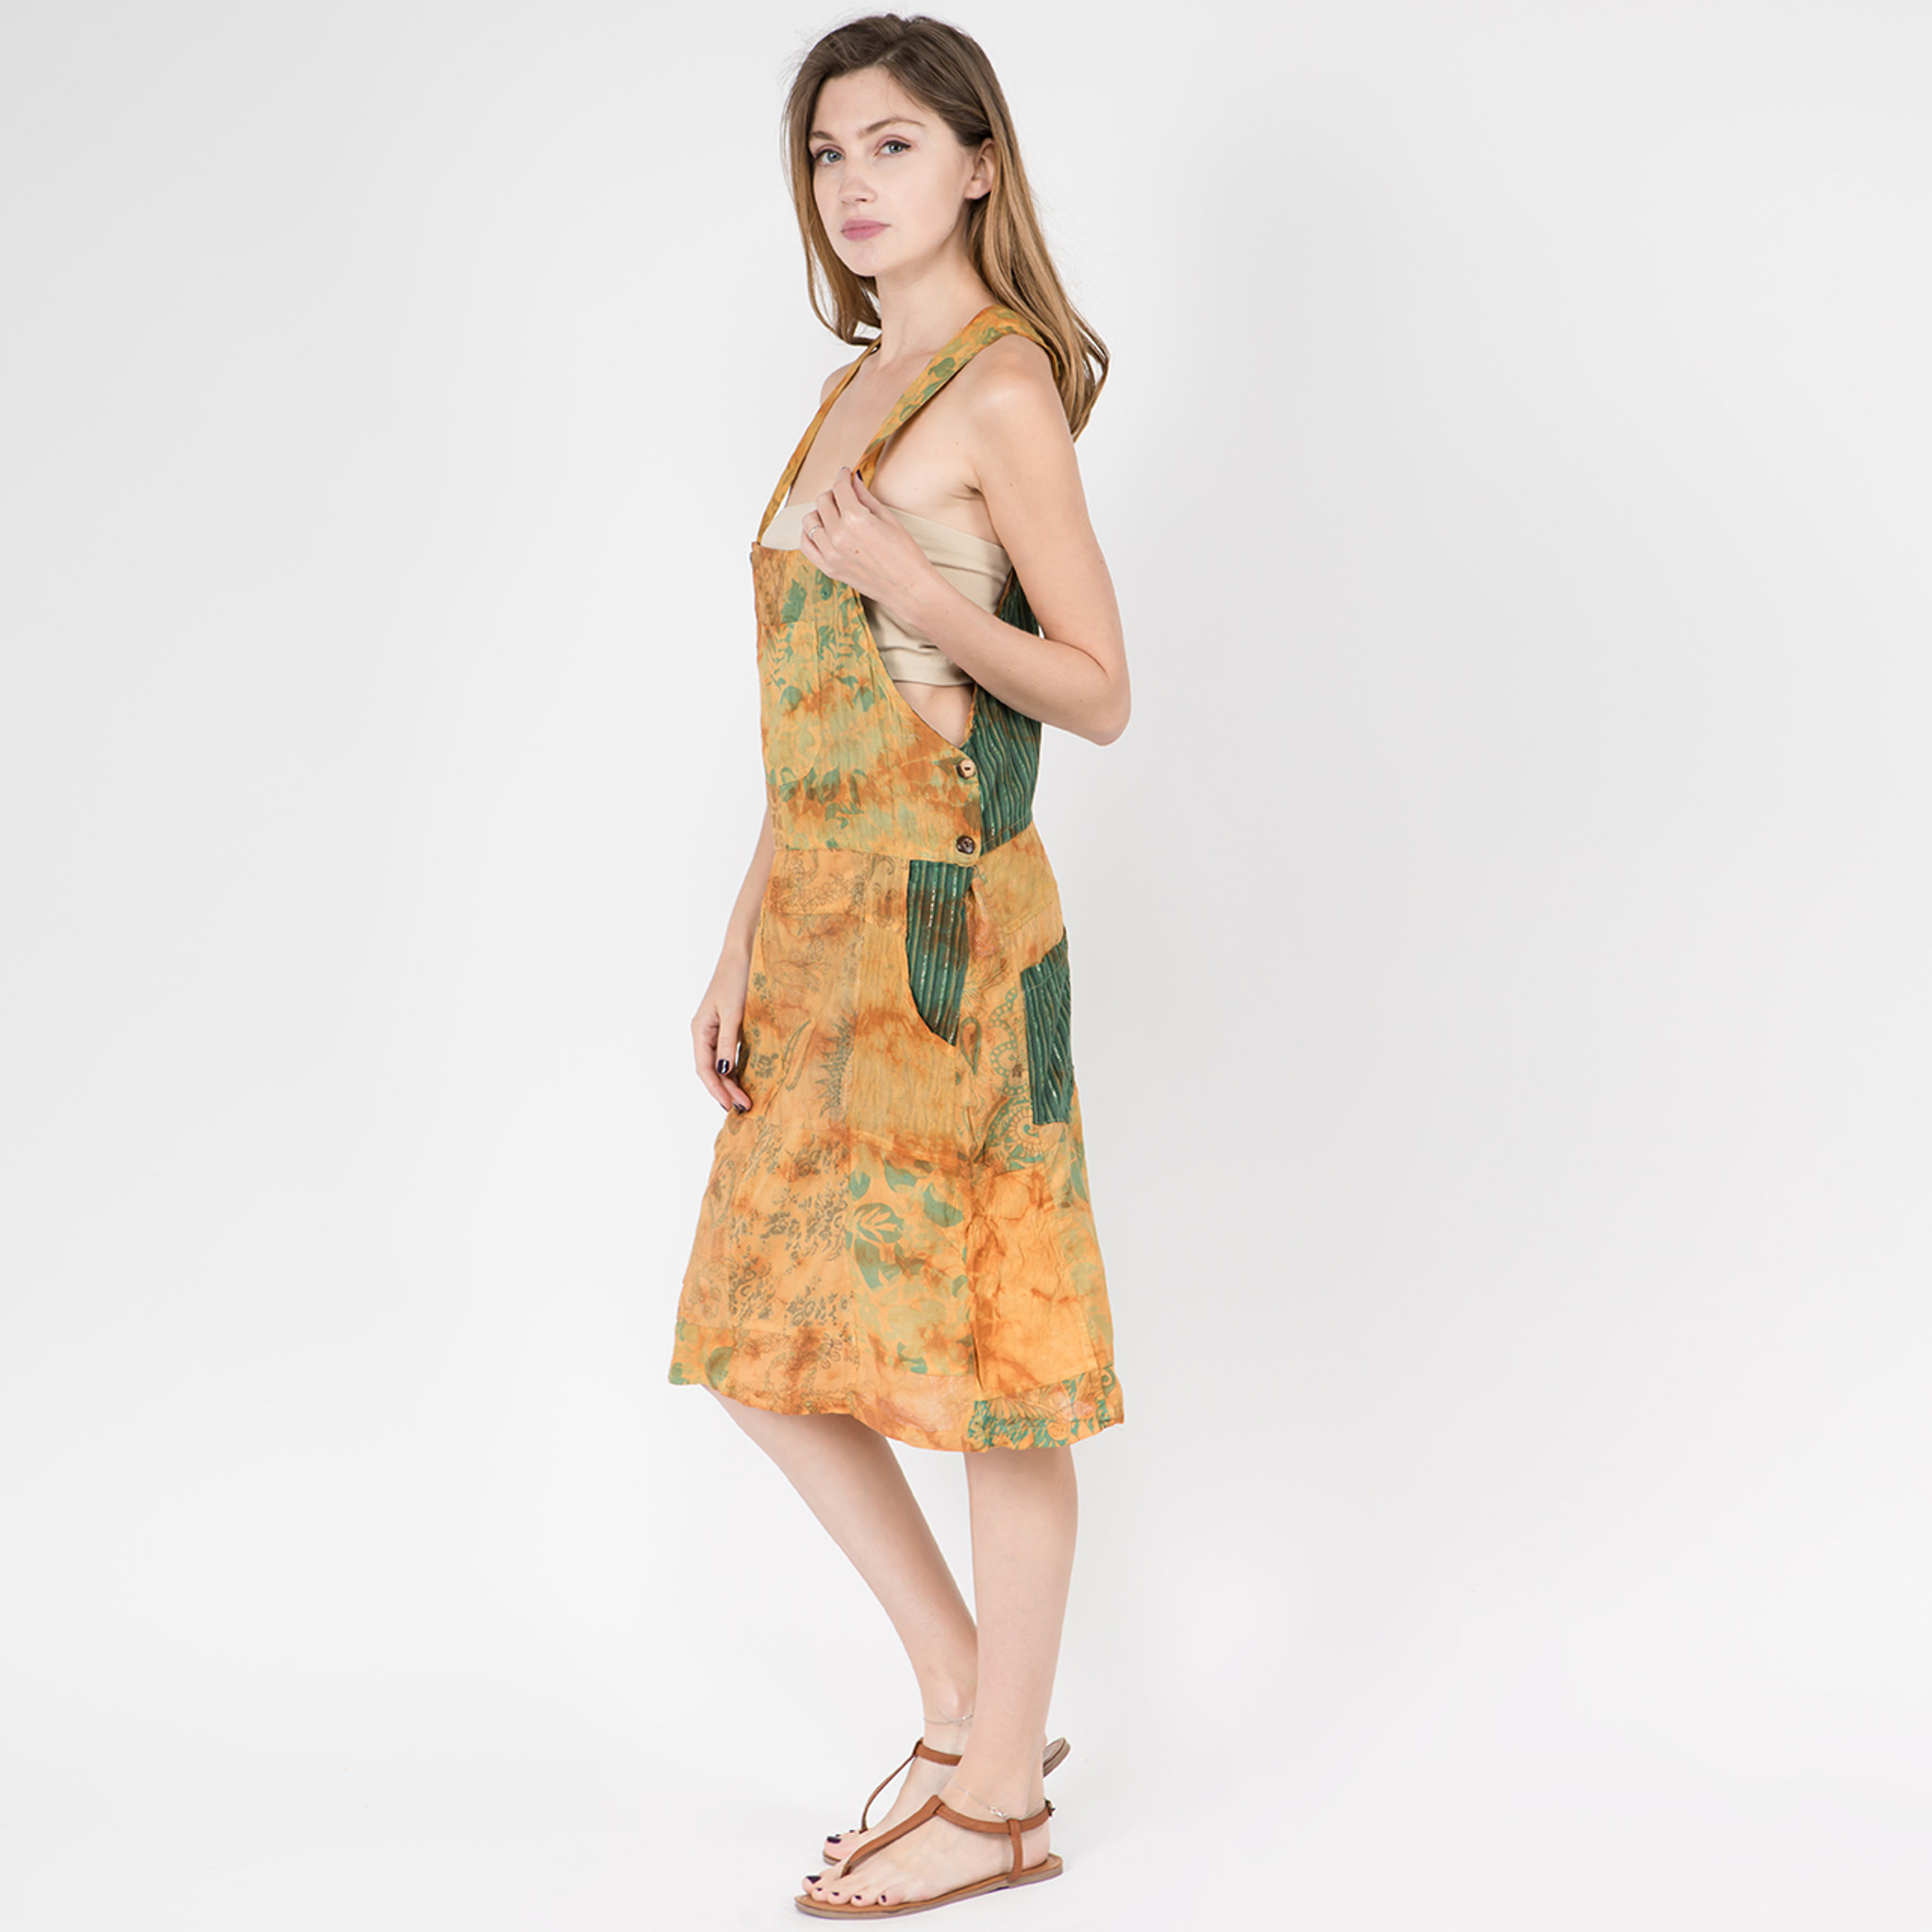 JANET DRESS - Mix Jaipuri Patch Overall Mini Dress